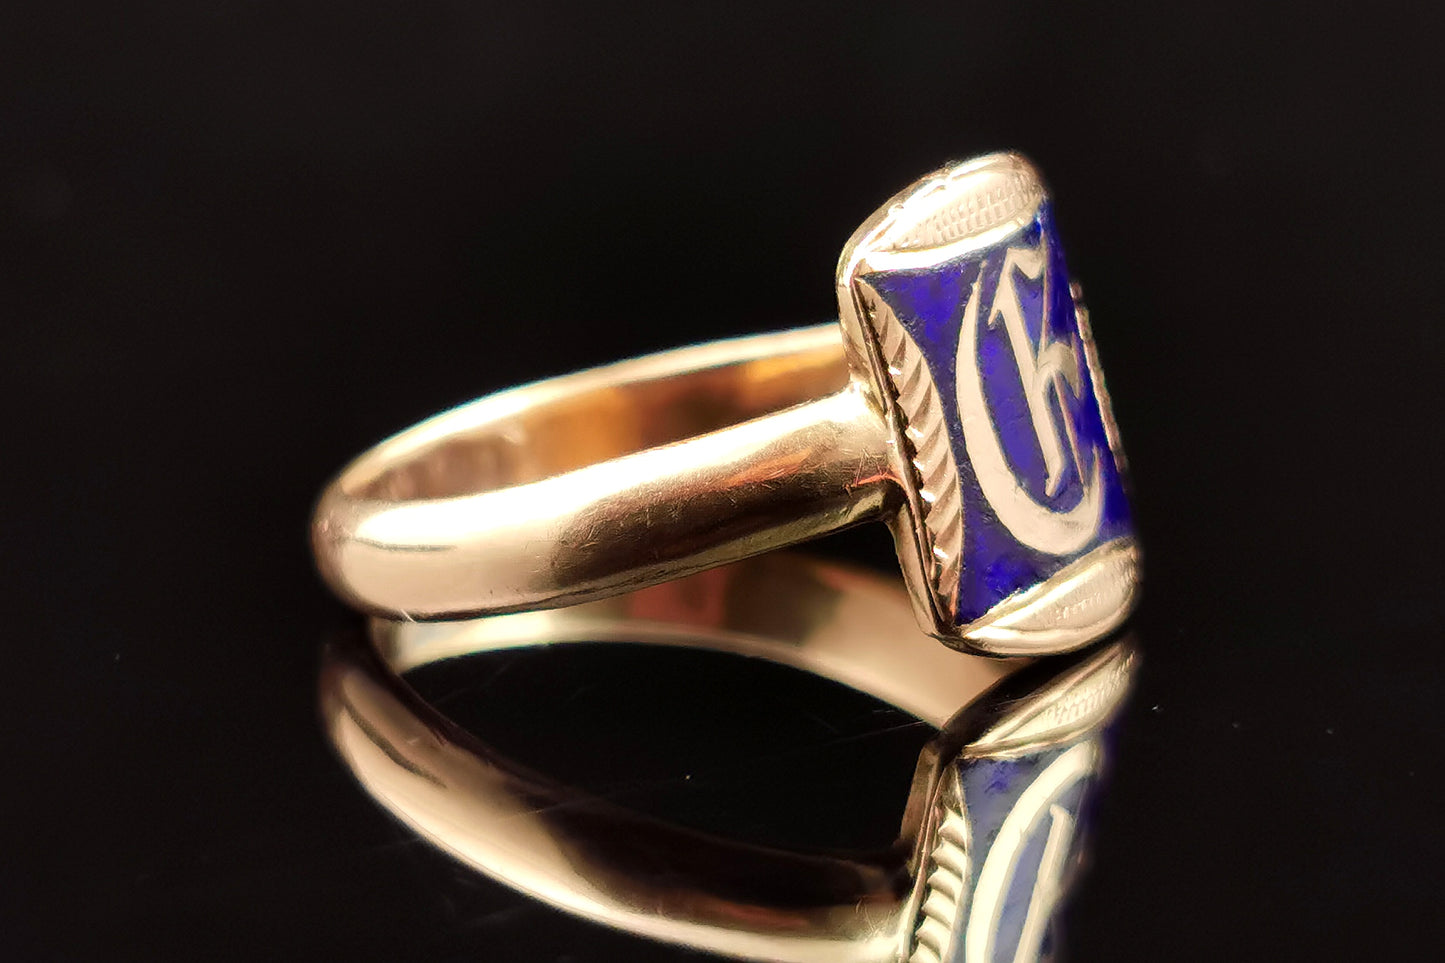 Antique 15ct Rose gold monogram signet ring, Blue enamel